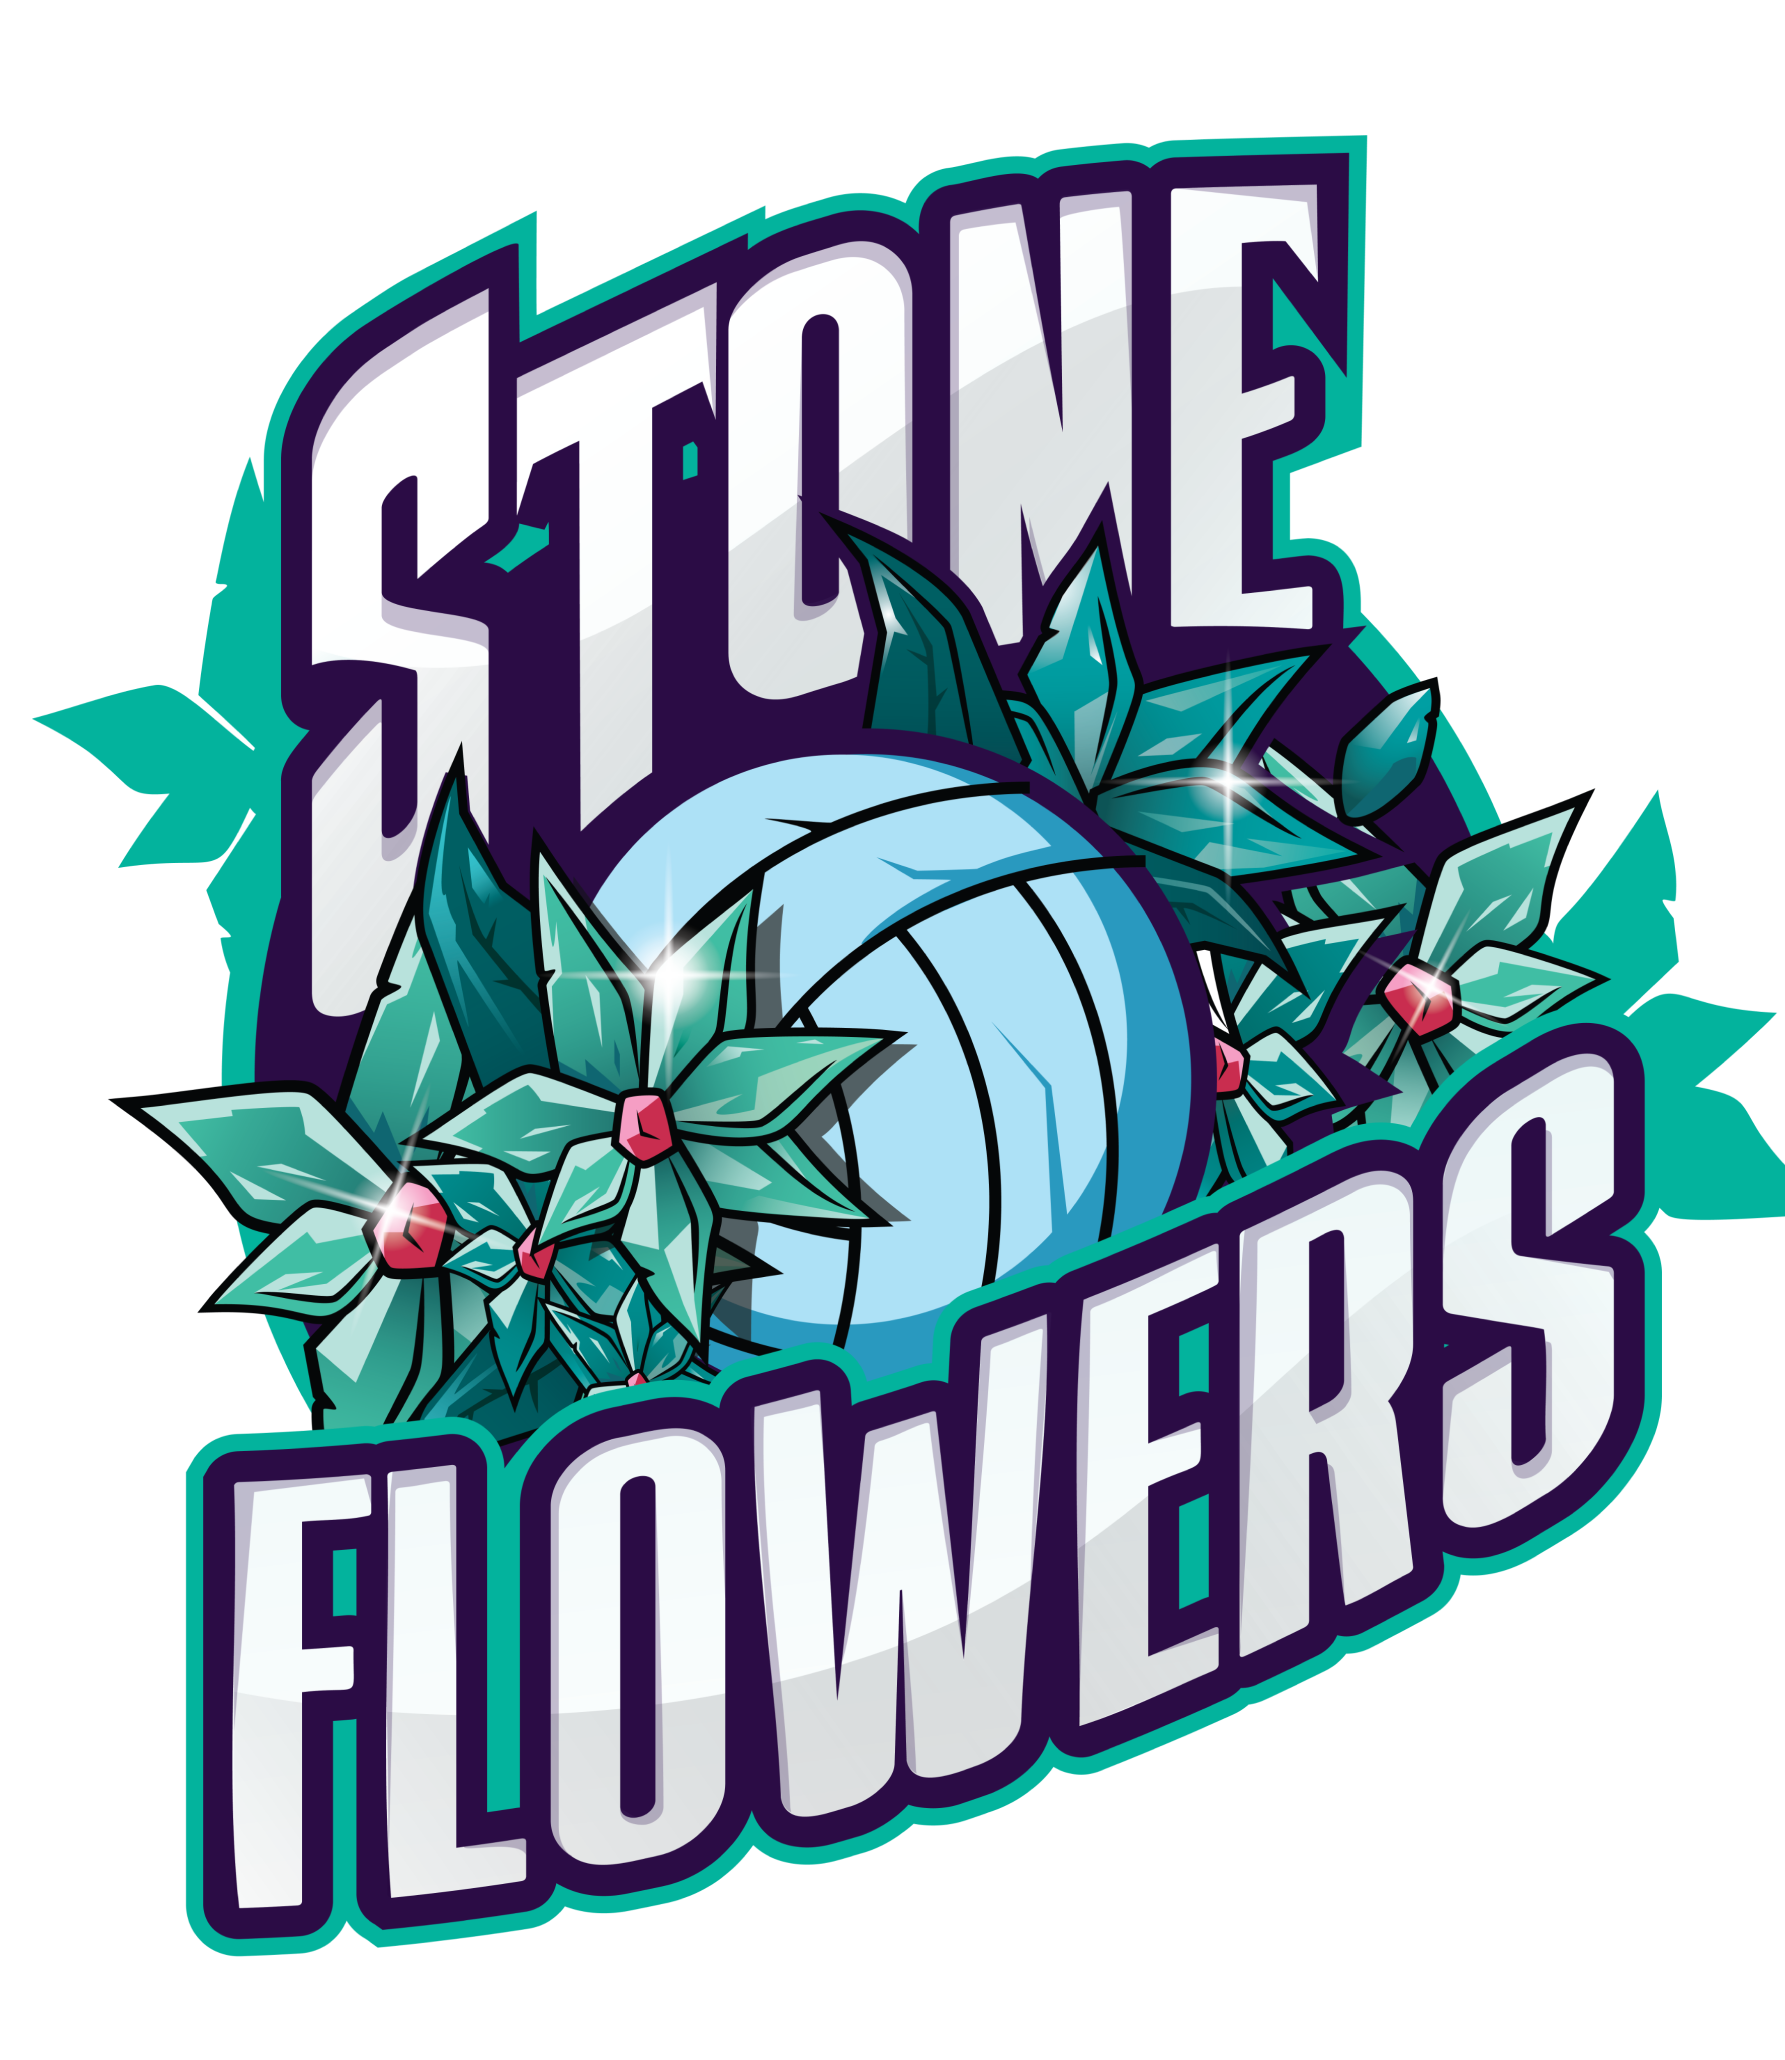 Stone Flowers